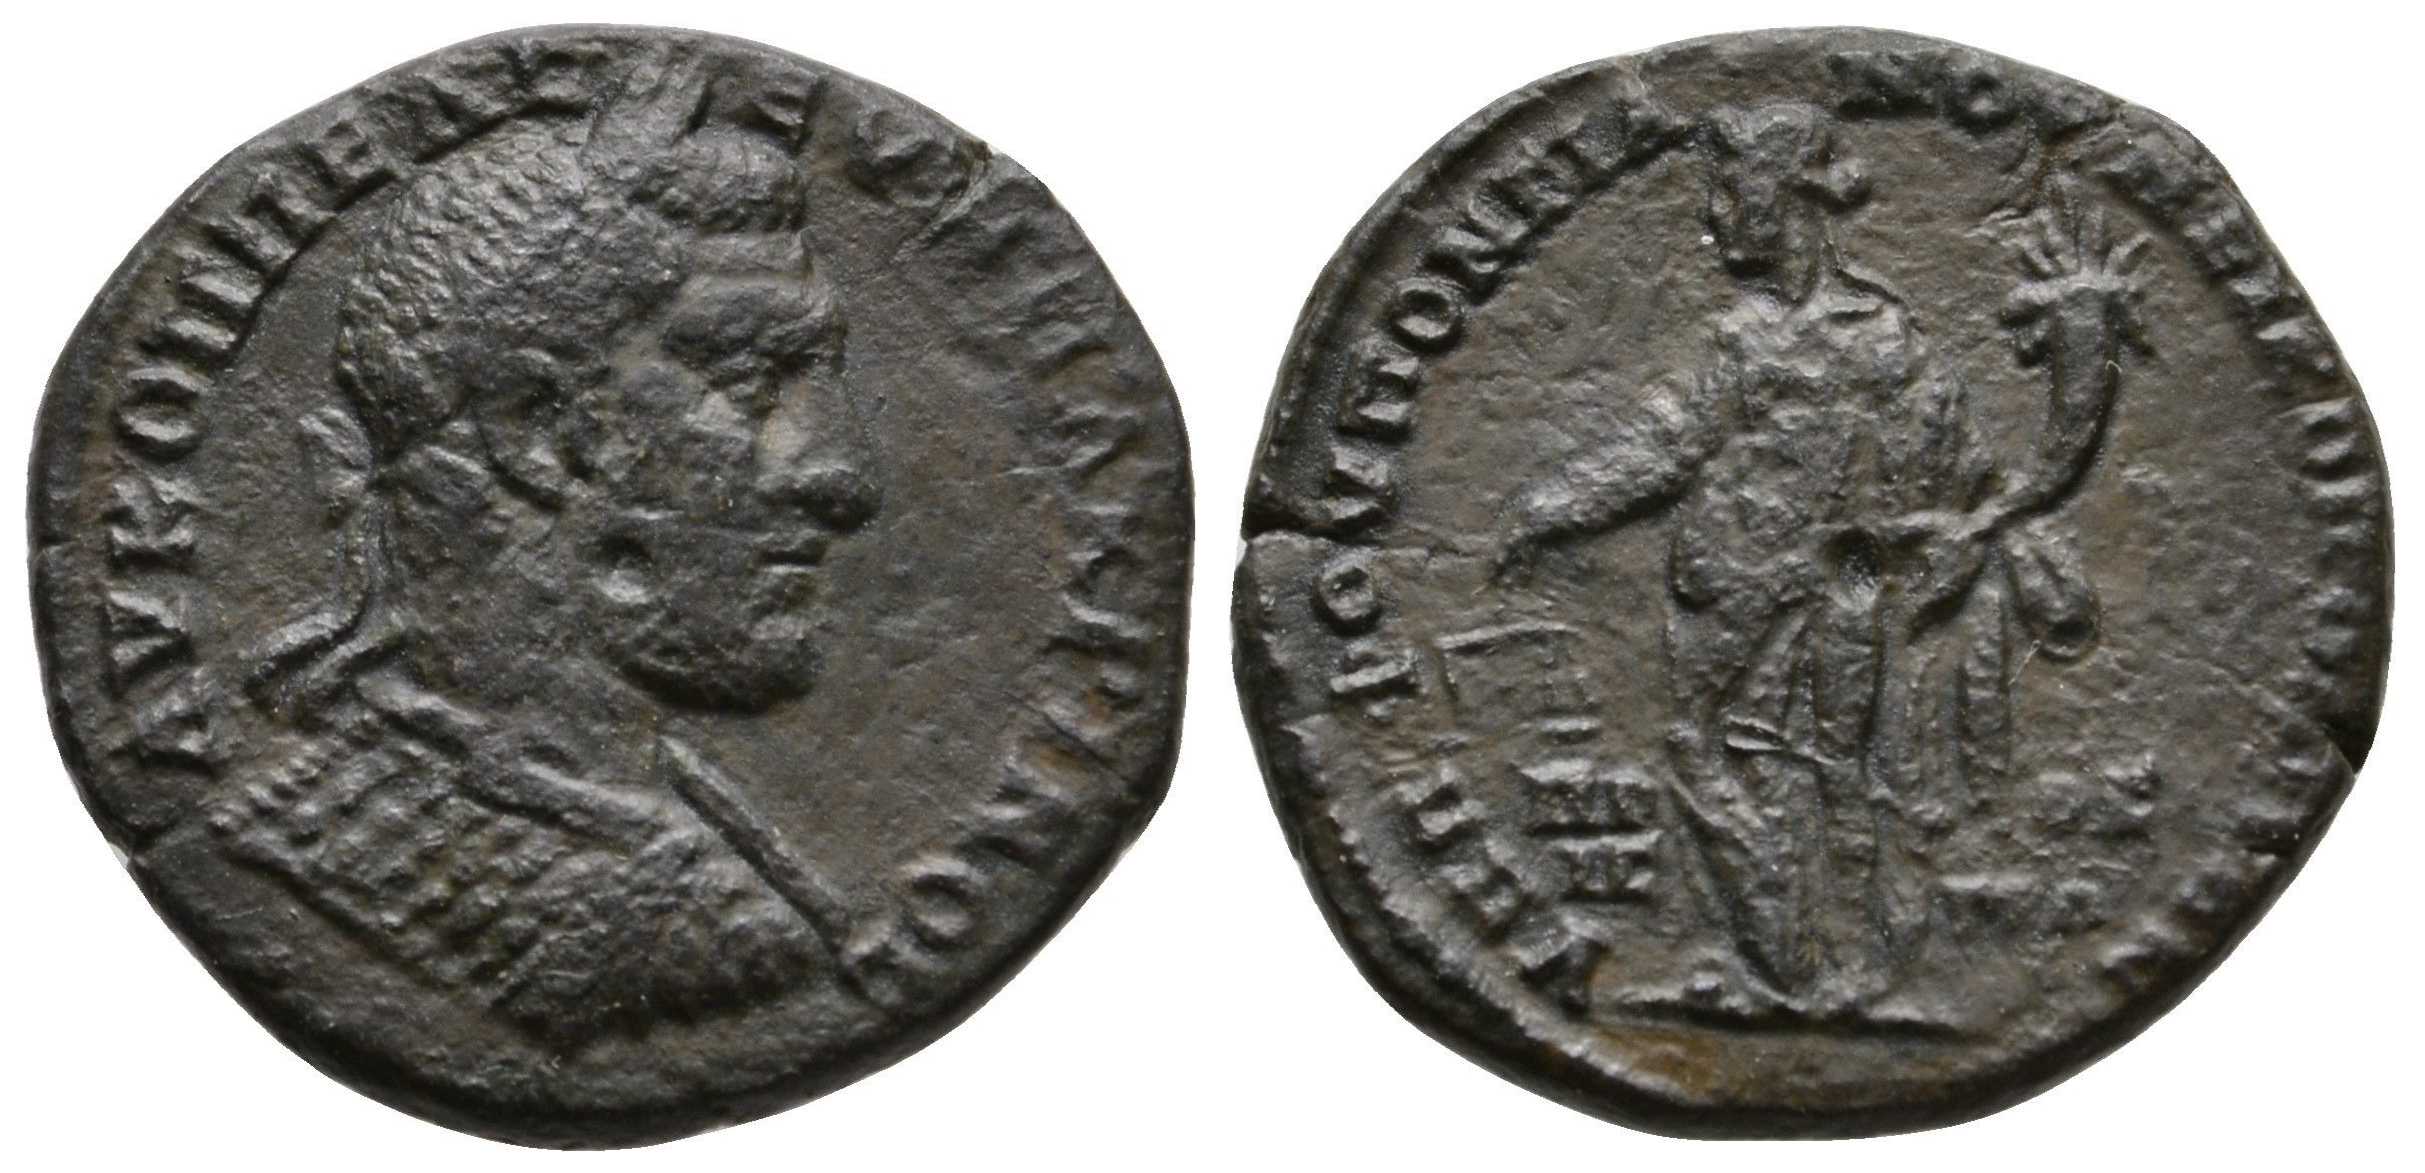 6212 Nicopolis ad Istrum Moesia Inferior Macrinus AE